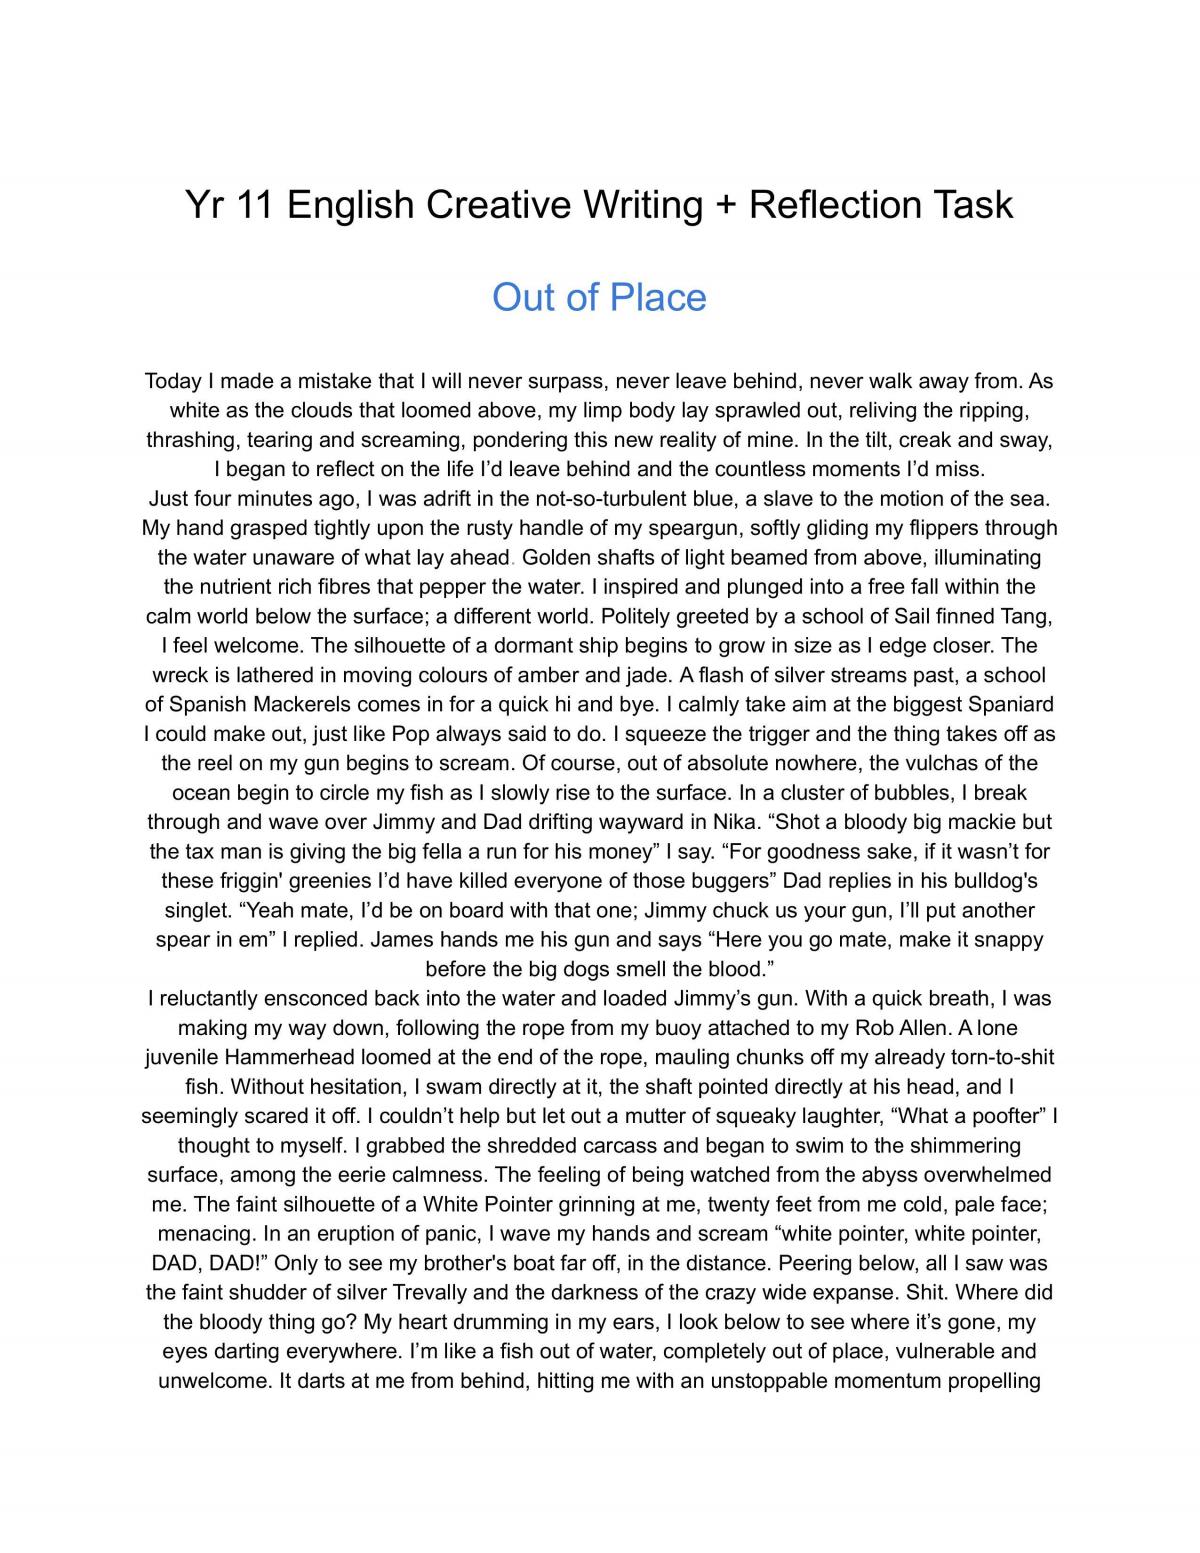 creative writing of reflection